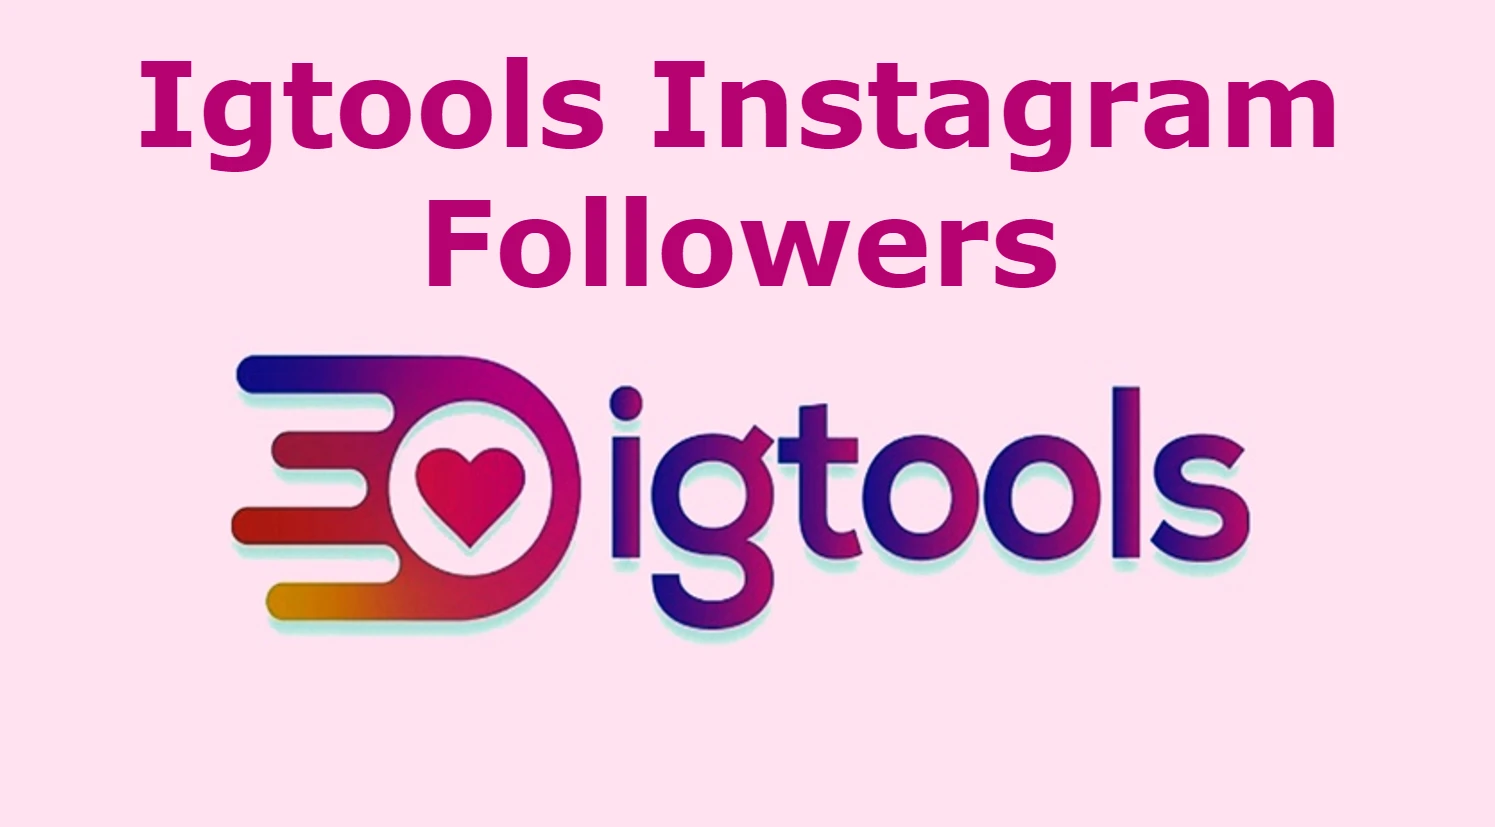 Igtools Instagram Followers